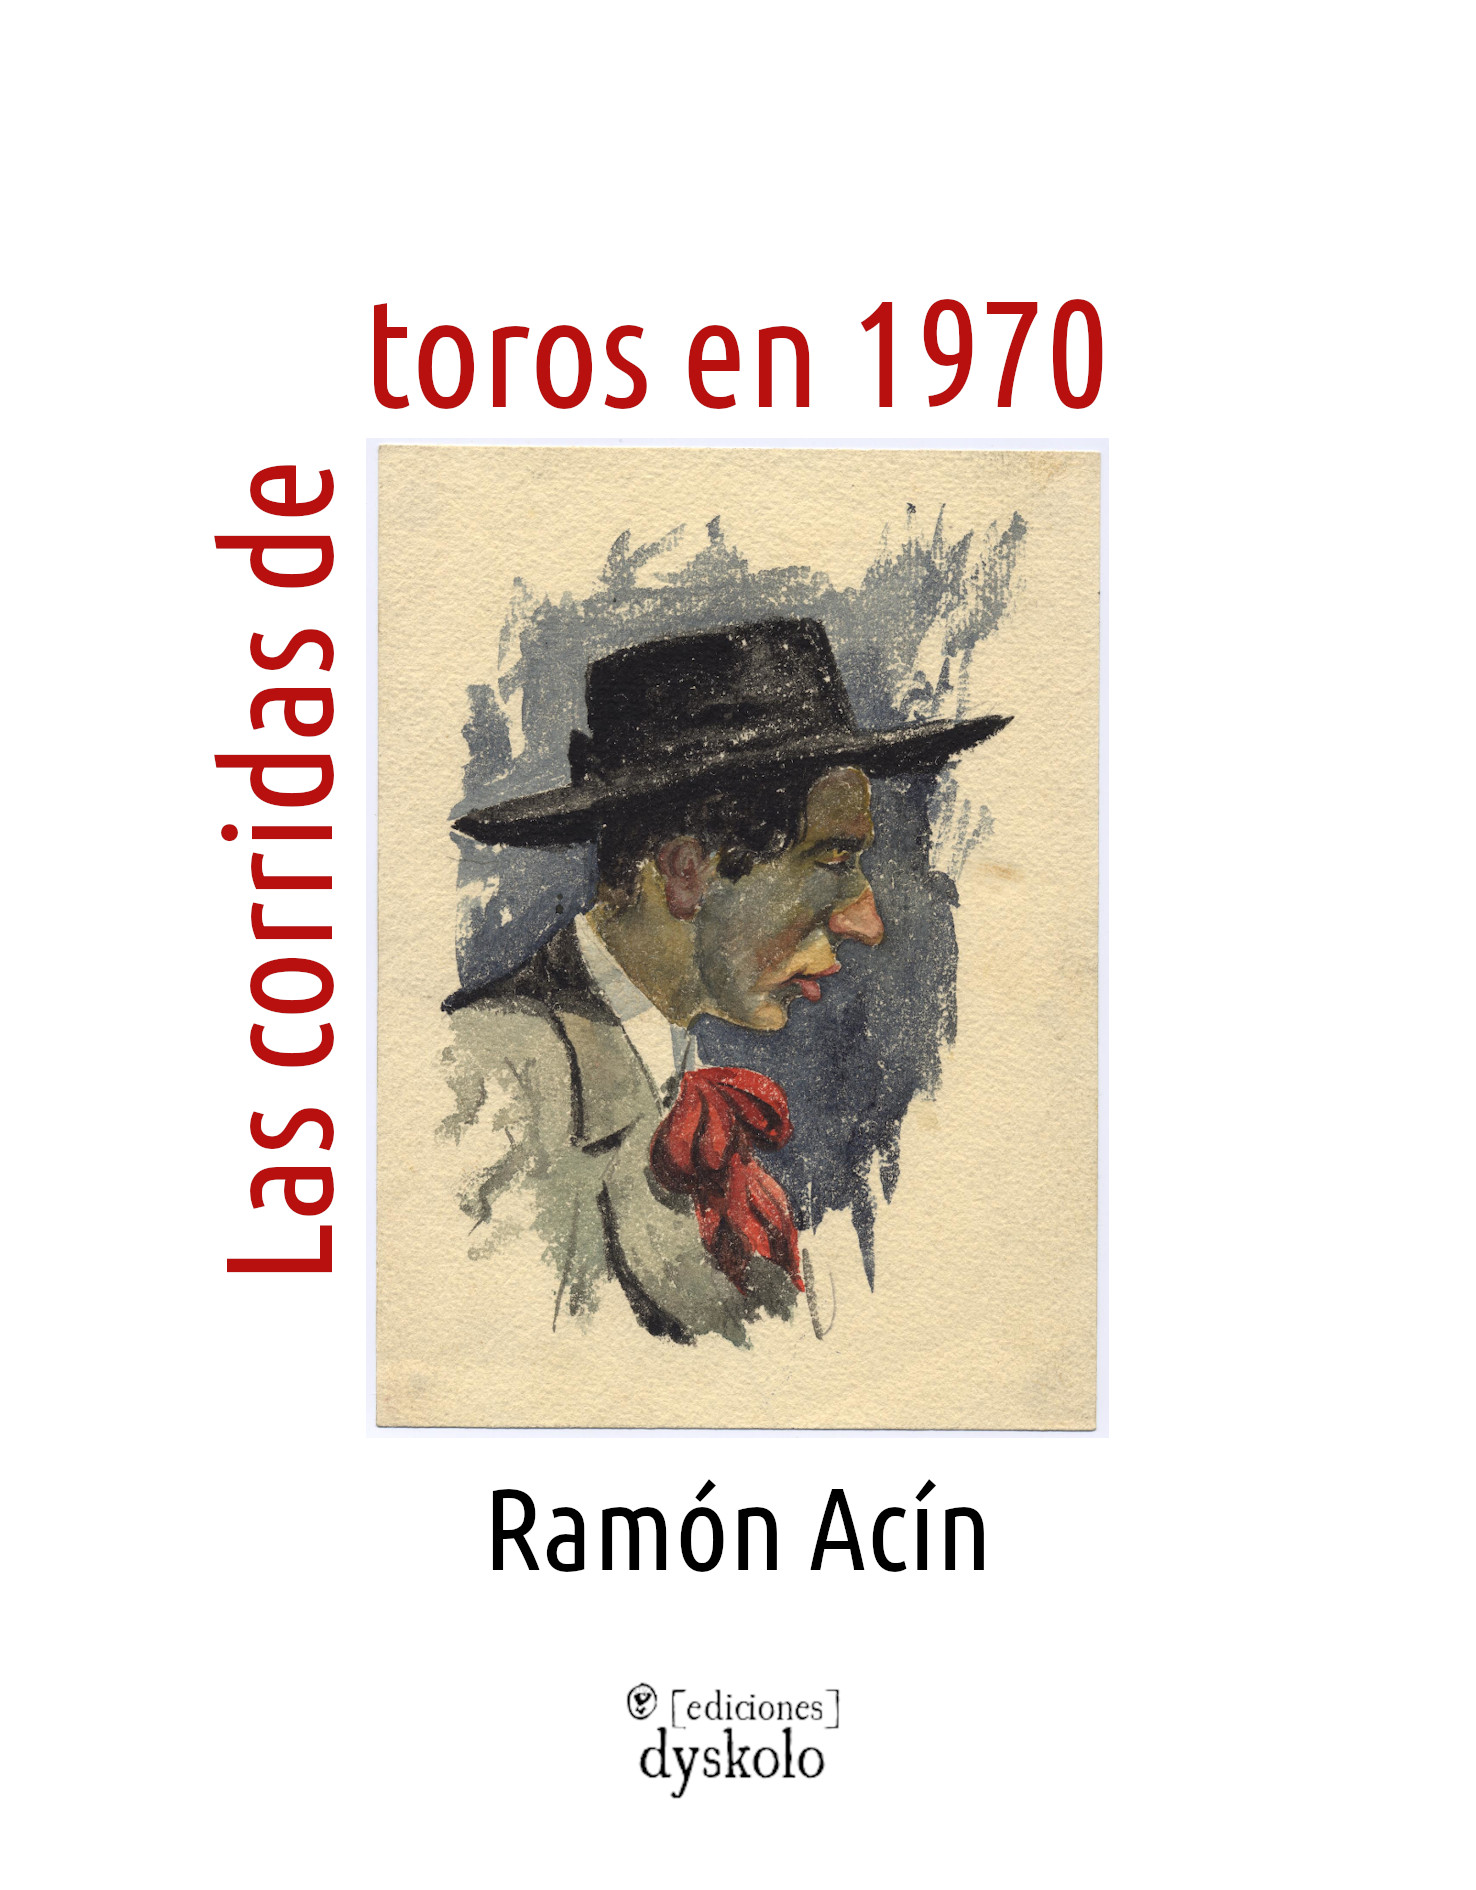 Ramón Acín: Las corridas de toros en 1970 (Spanish language, 2022, Dyskolo)